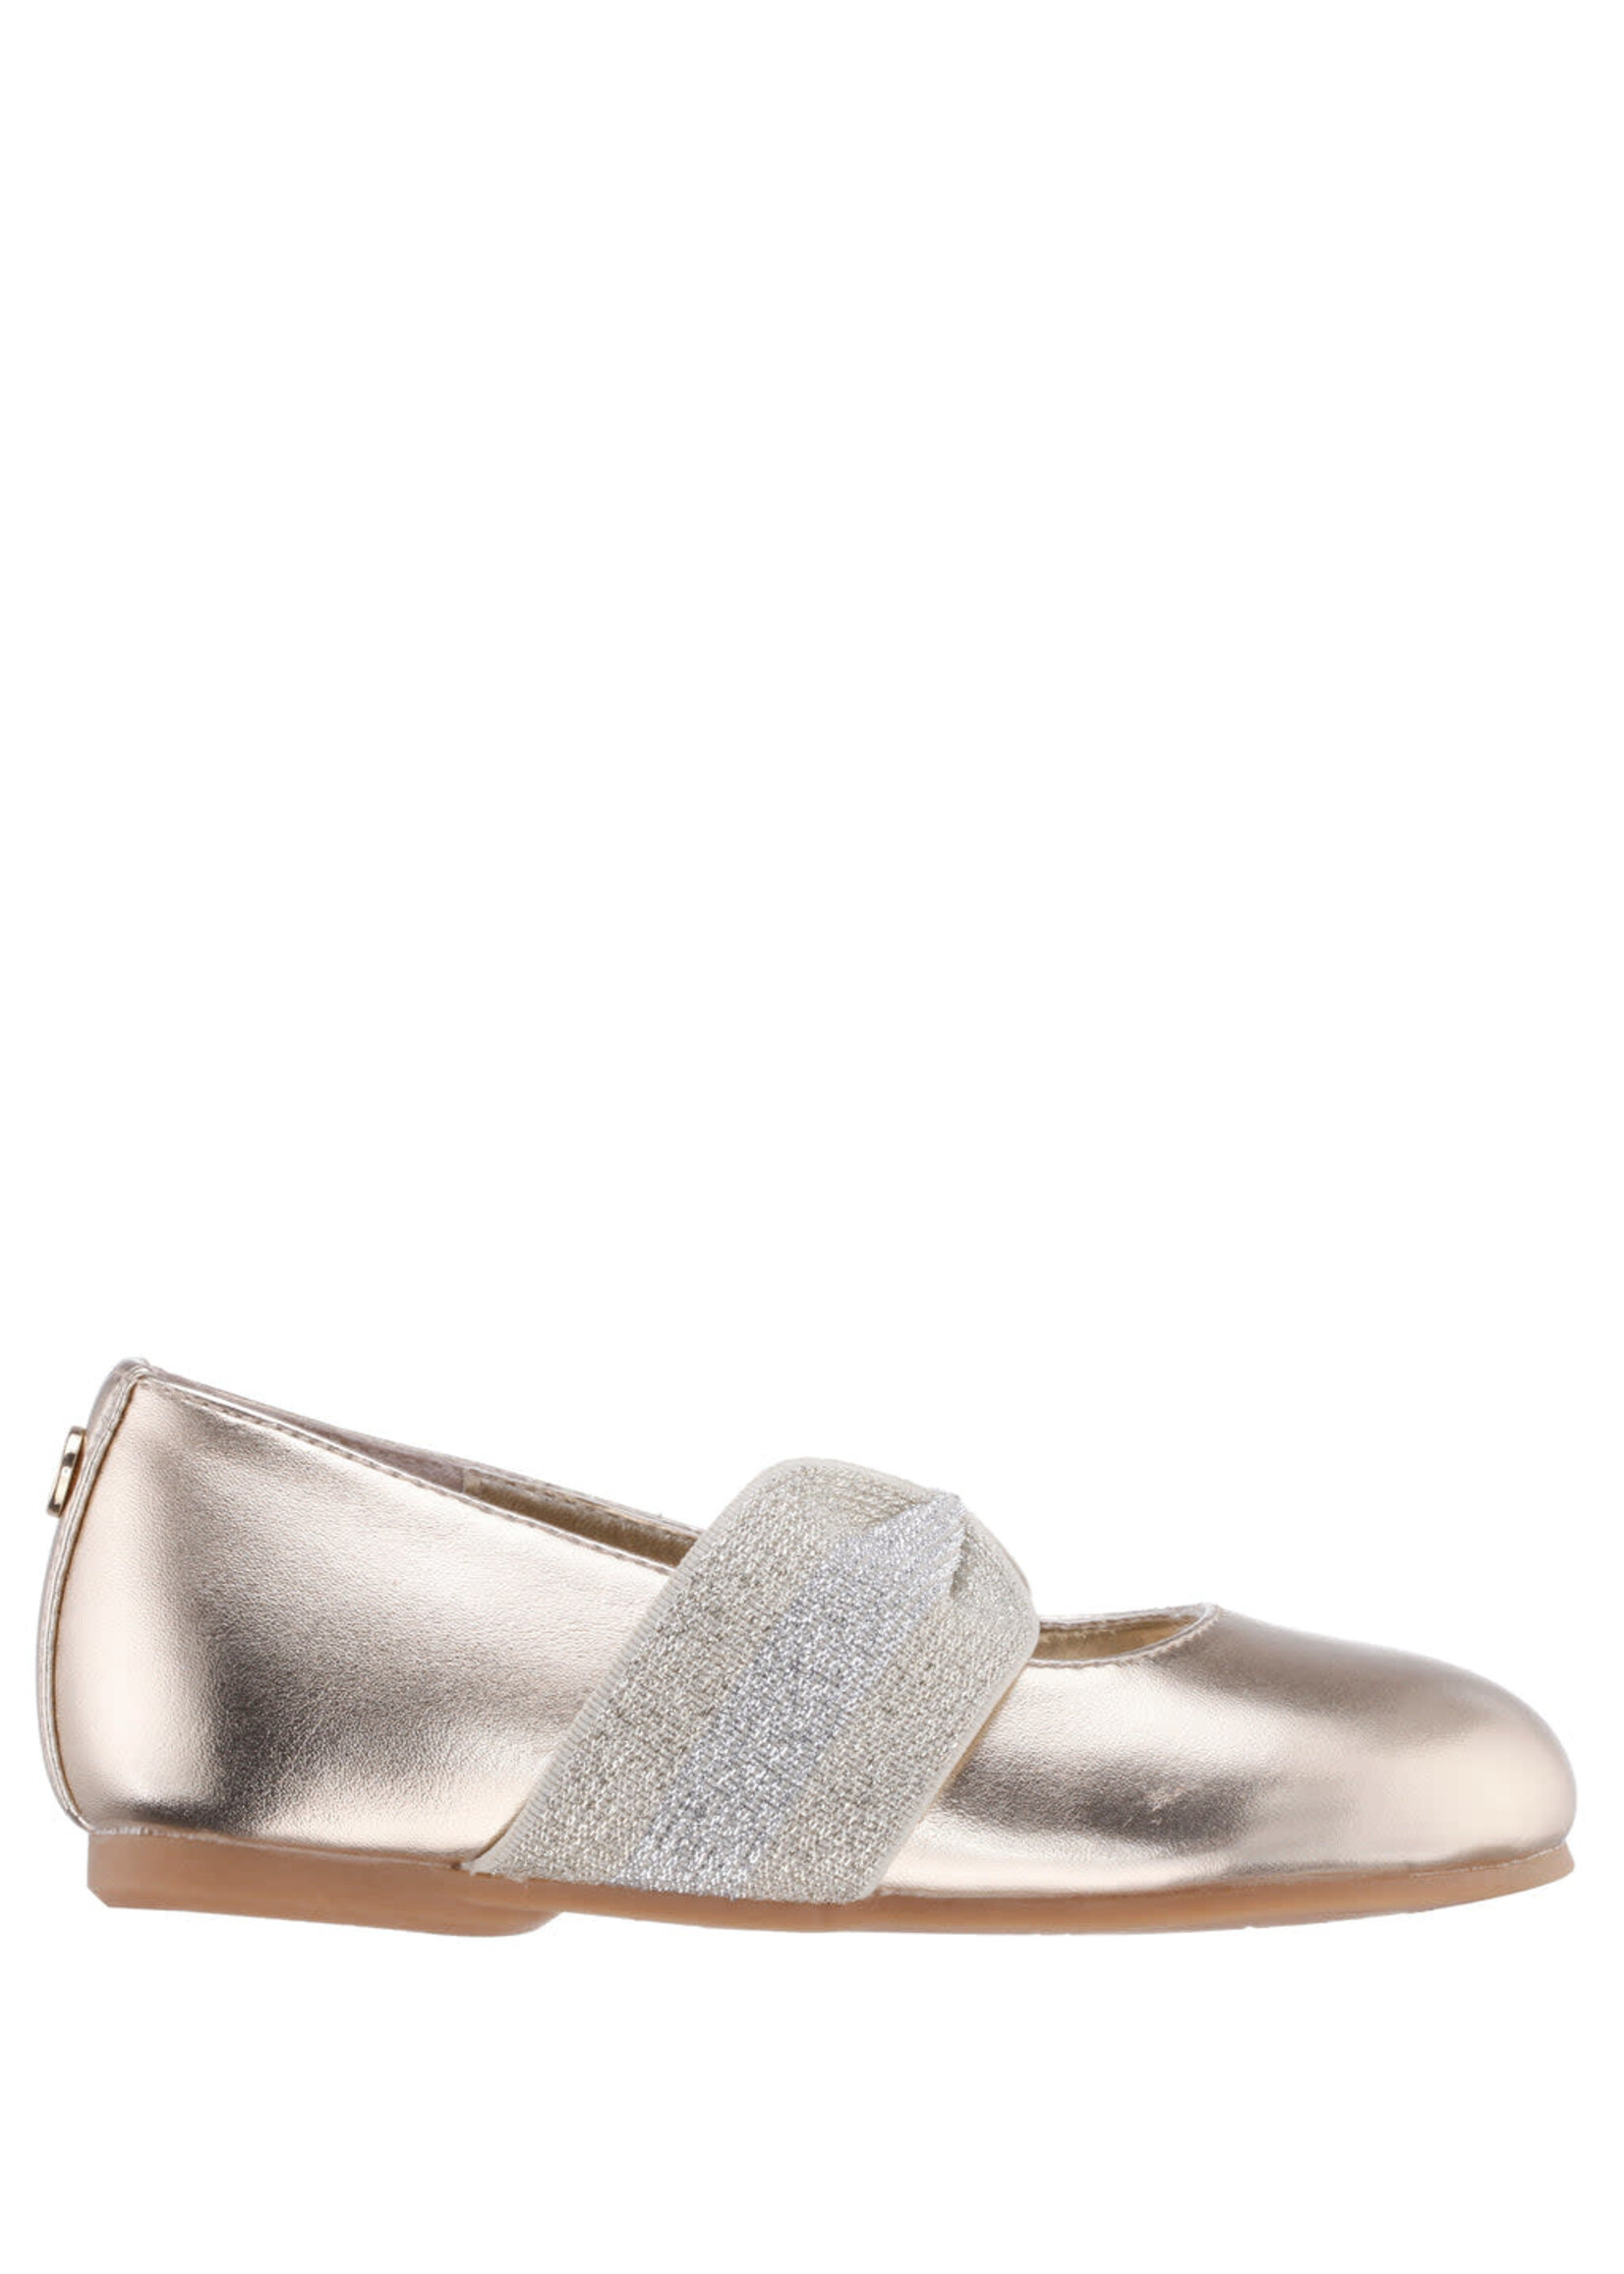 Nina Footwear Krissy-T in Gold Metallic for Toddlers By Nina Footwear